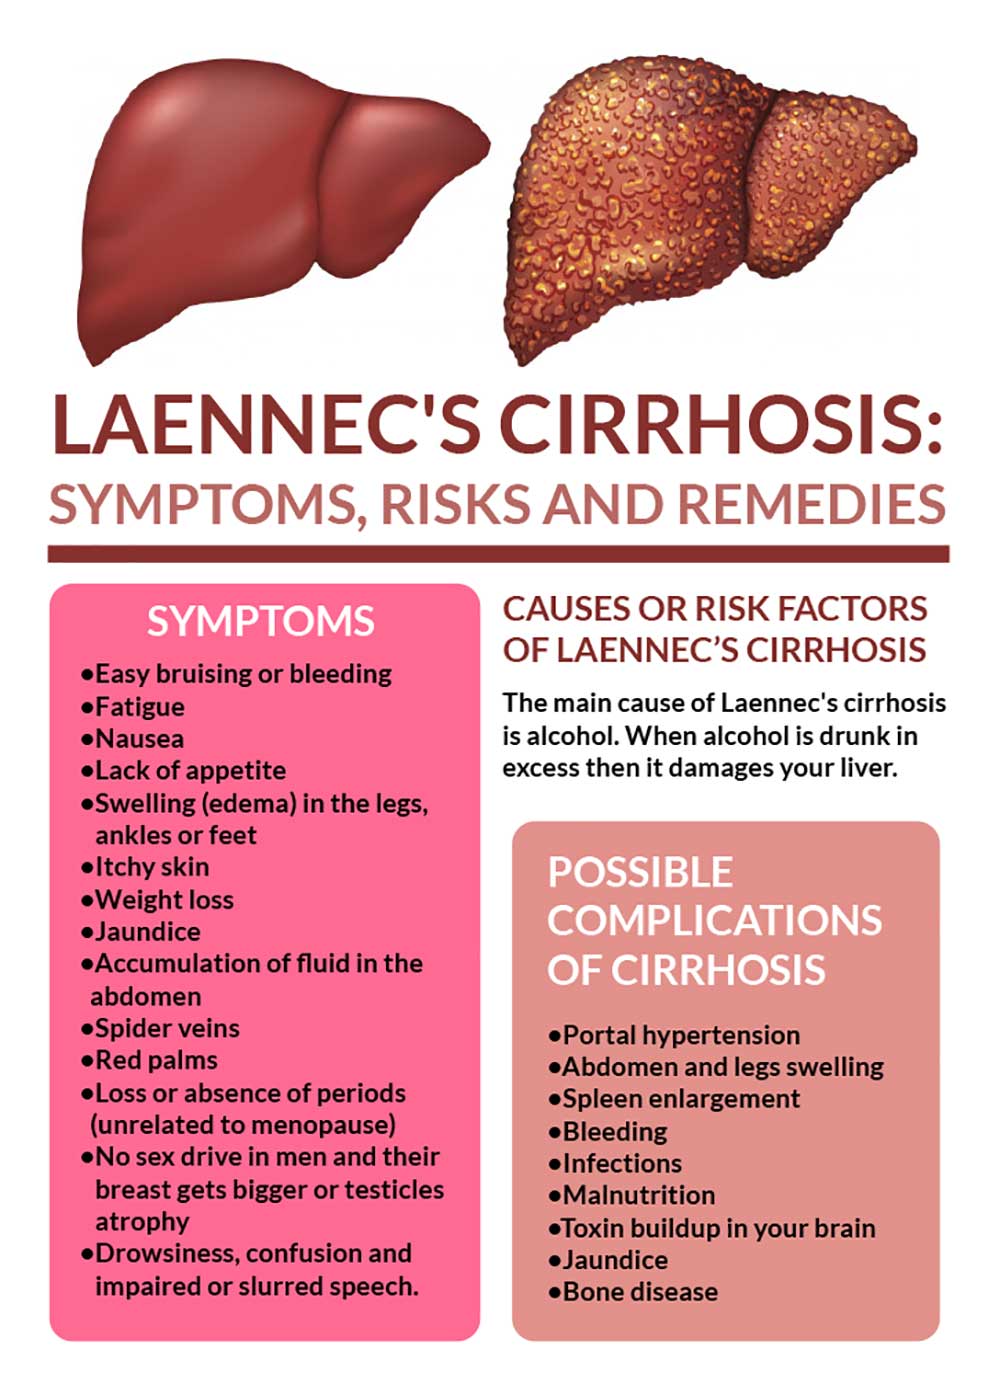 signs, symptoms, remedies of liver cirrhosis